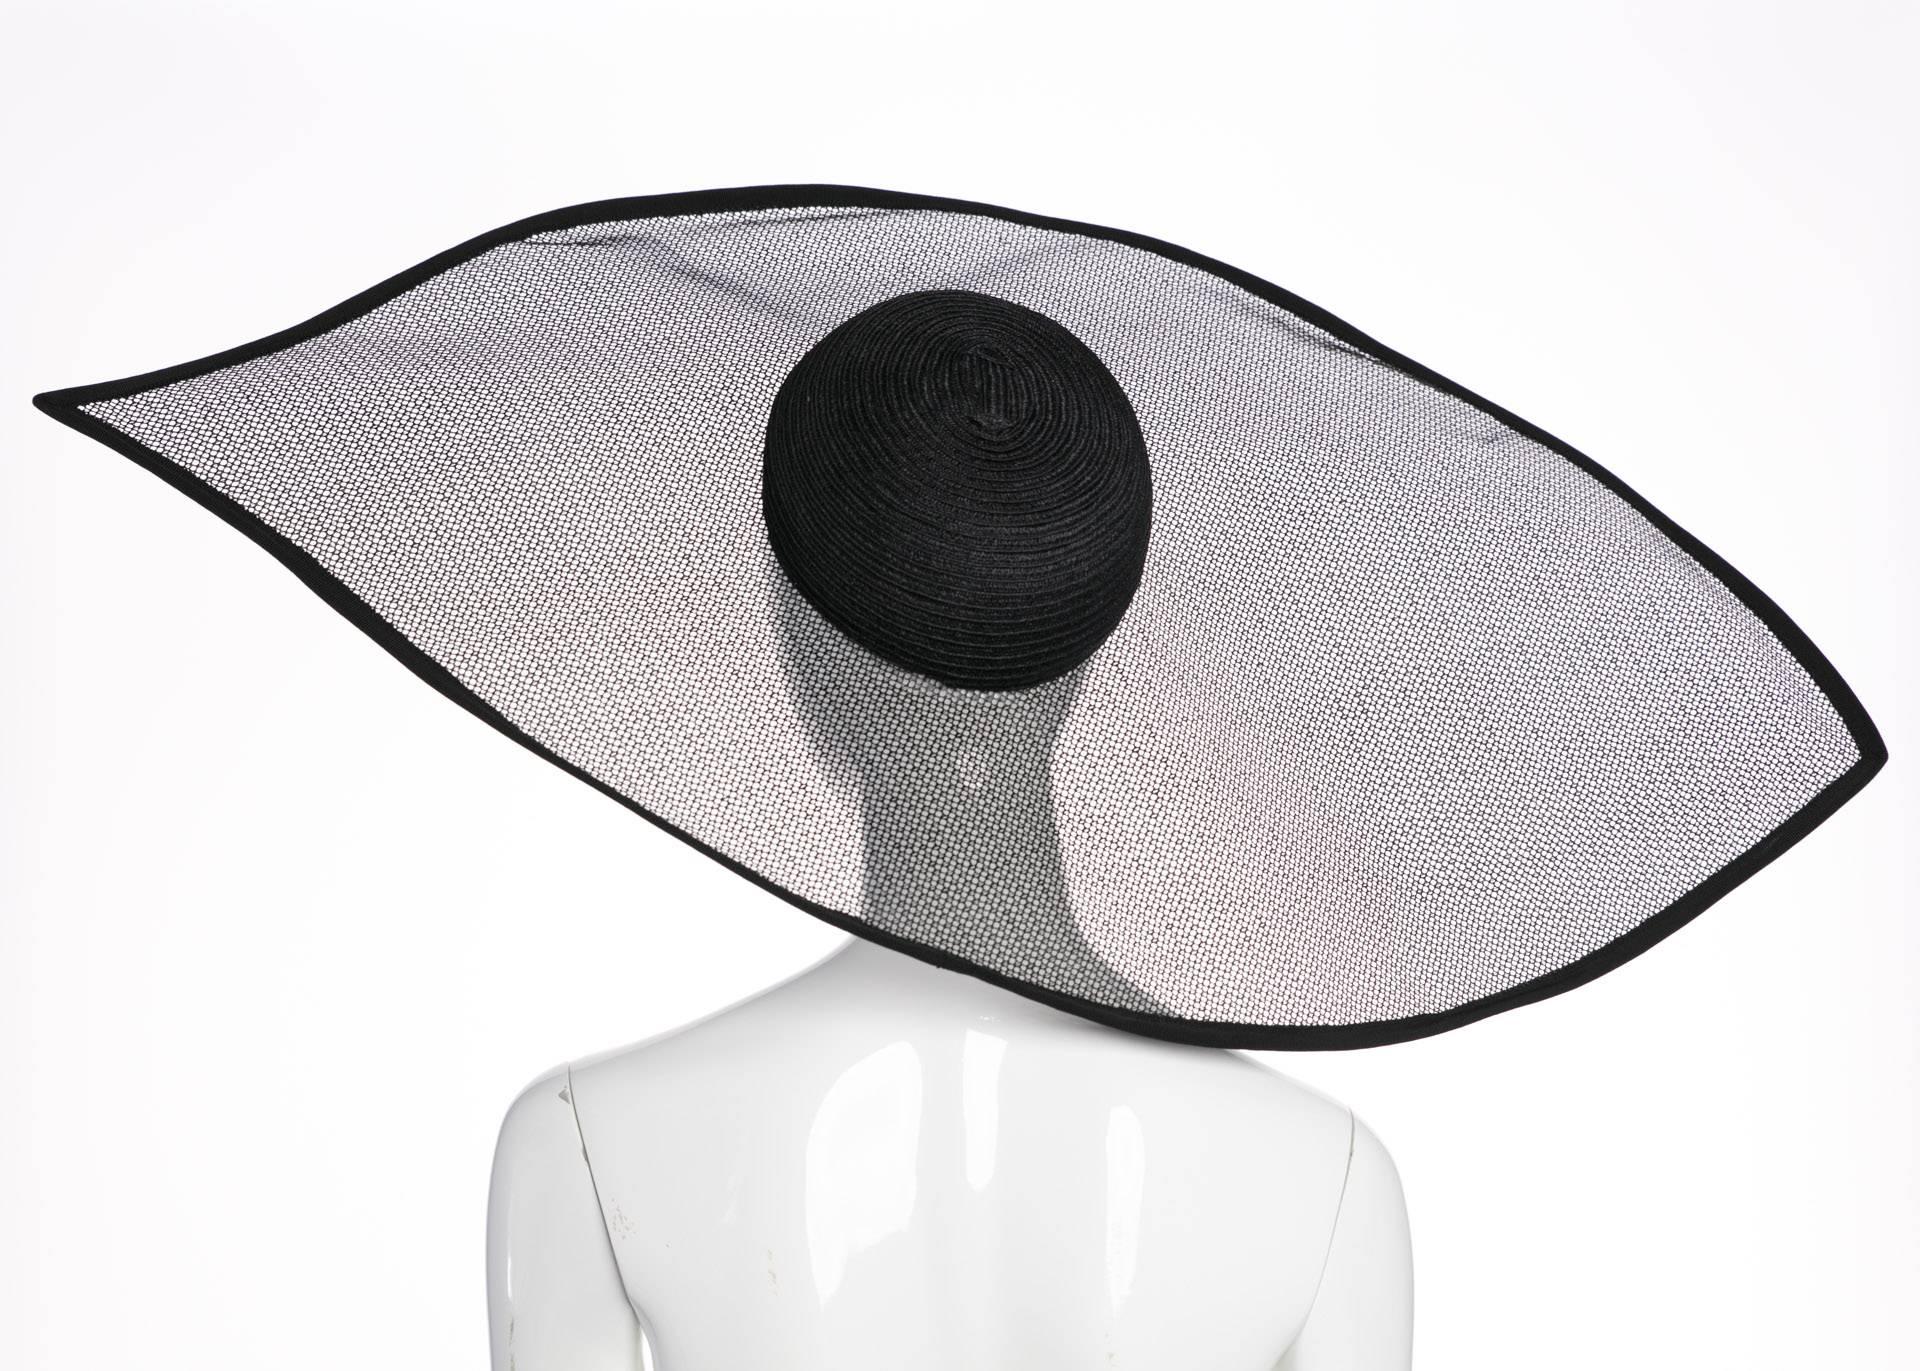  Vintage Giorgio Armani Black Sculptural  Wide Brim Eye Hat  For Sale 1